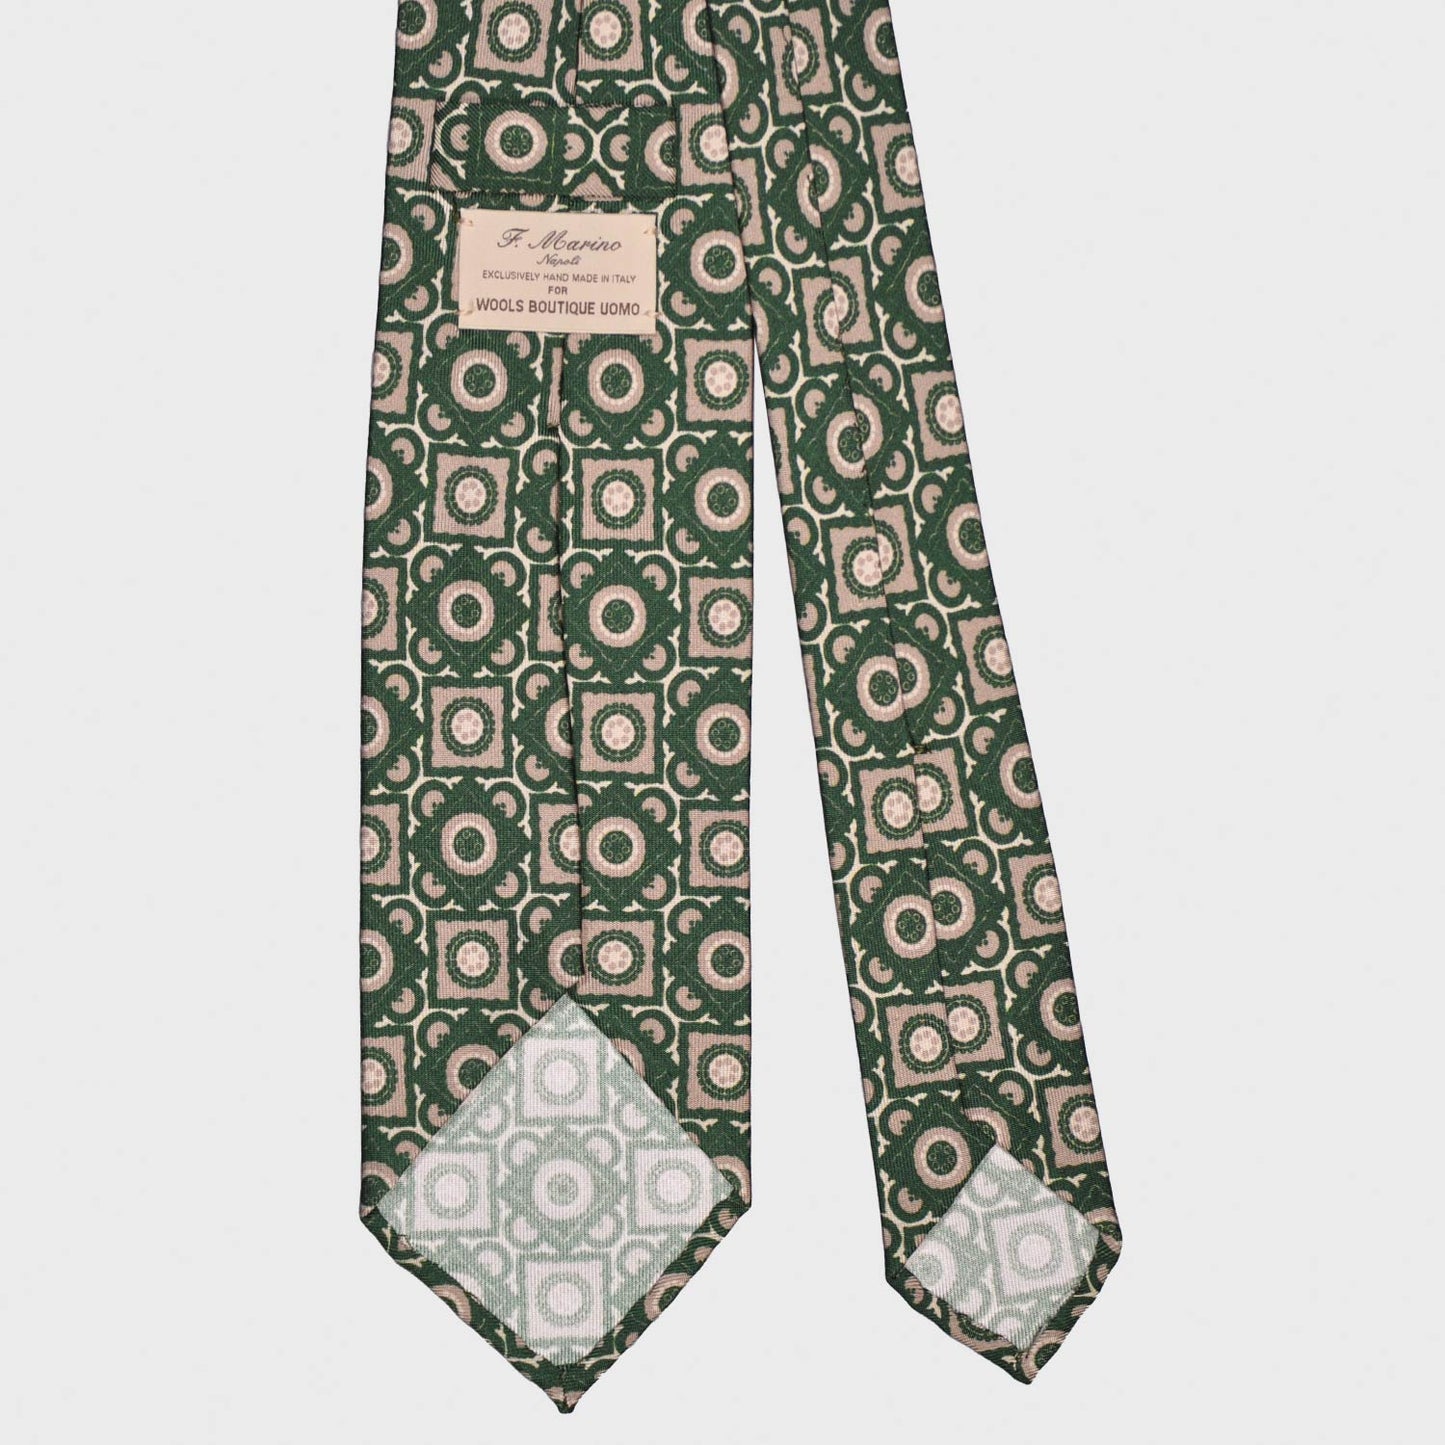 F.Marino Silk Tie 3 Folds Vintage Geometric Pattern Bottle Green-Wools Boutique Uomo